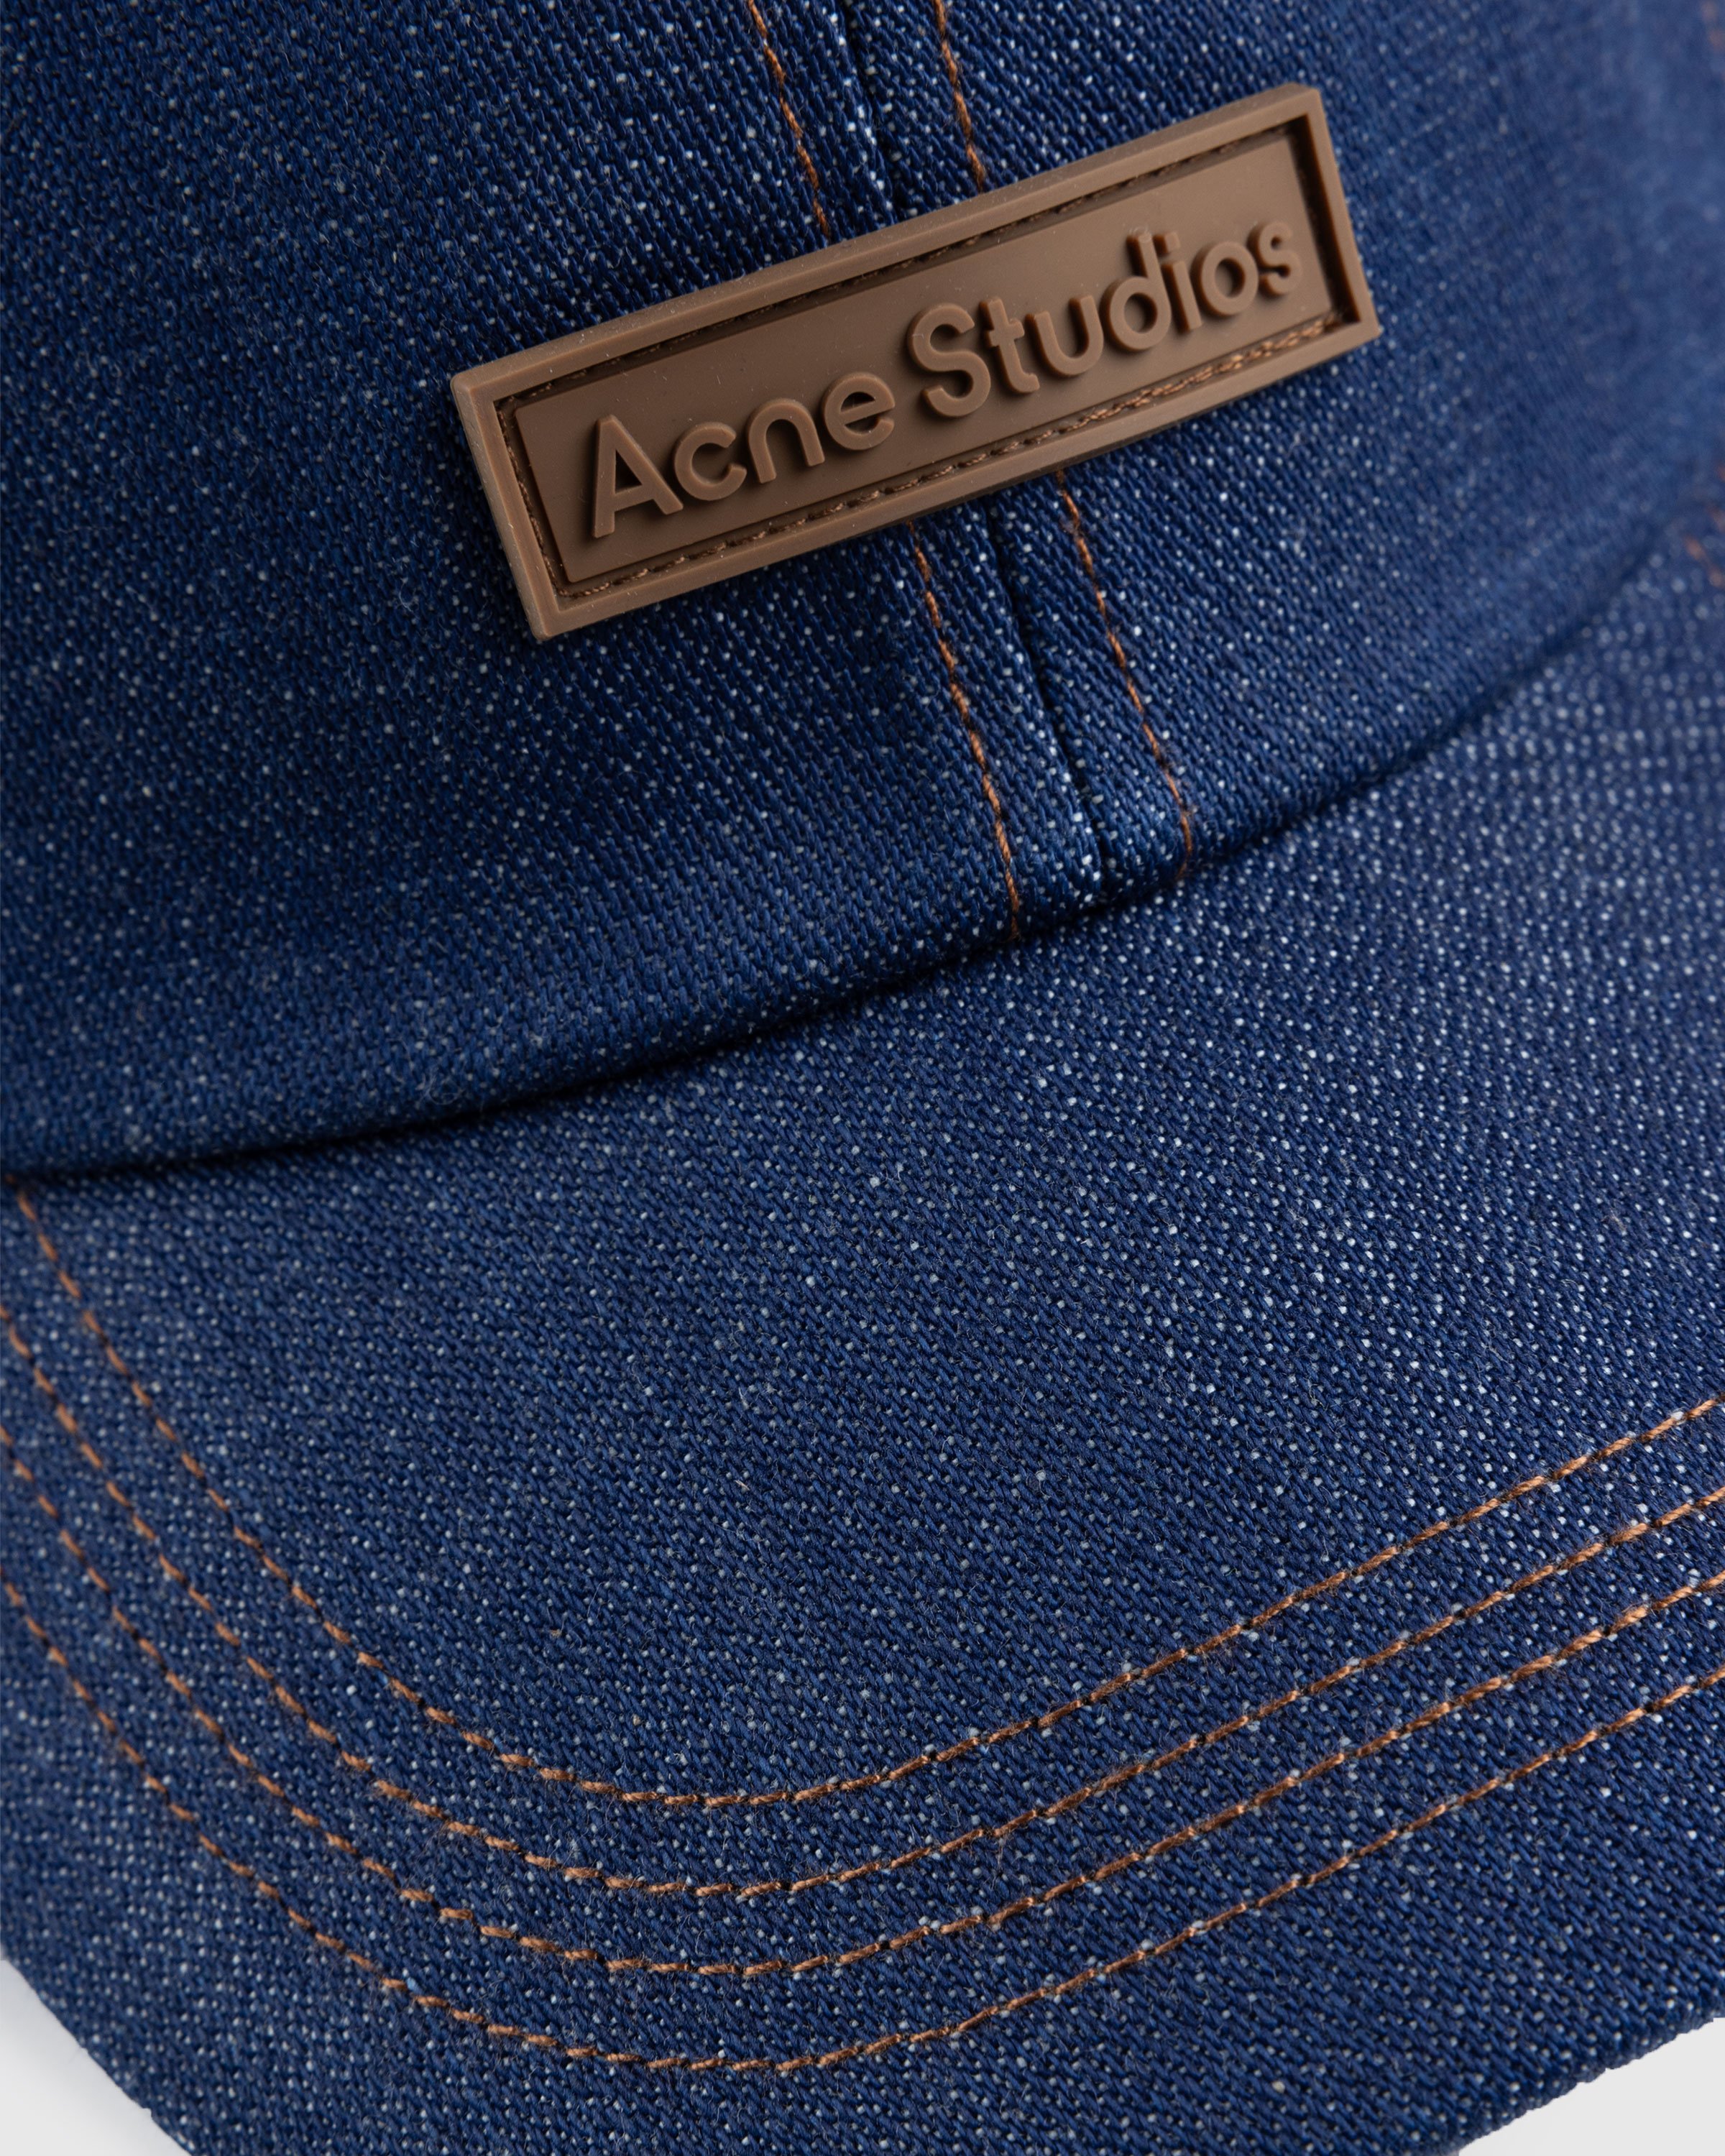 Acne Studios - FN-UX-HATS000208 Indigo blue - Accessories - Blue - Image 7